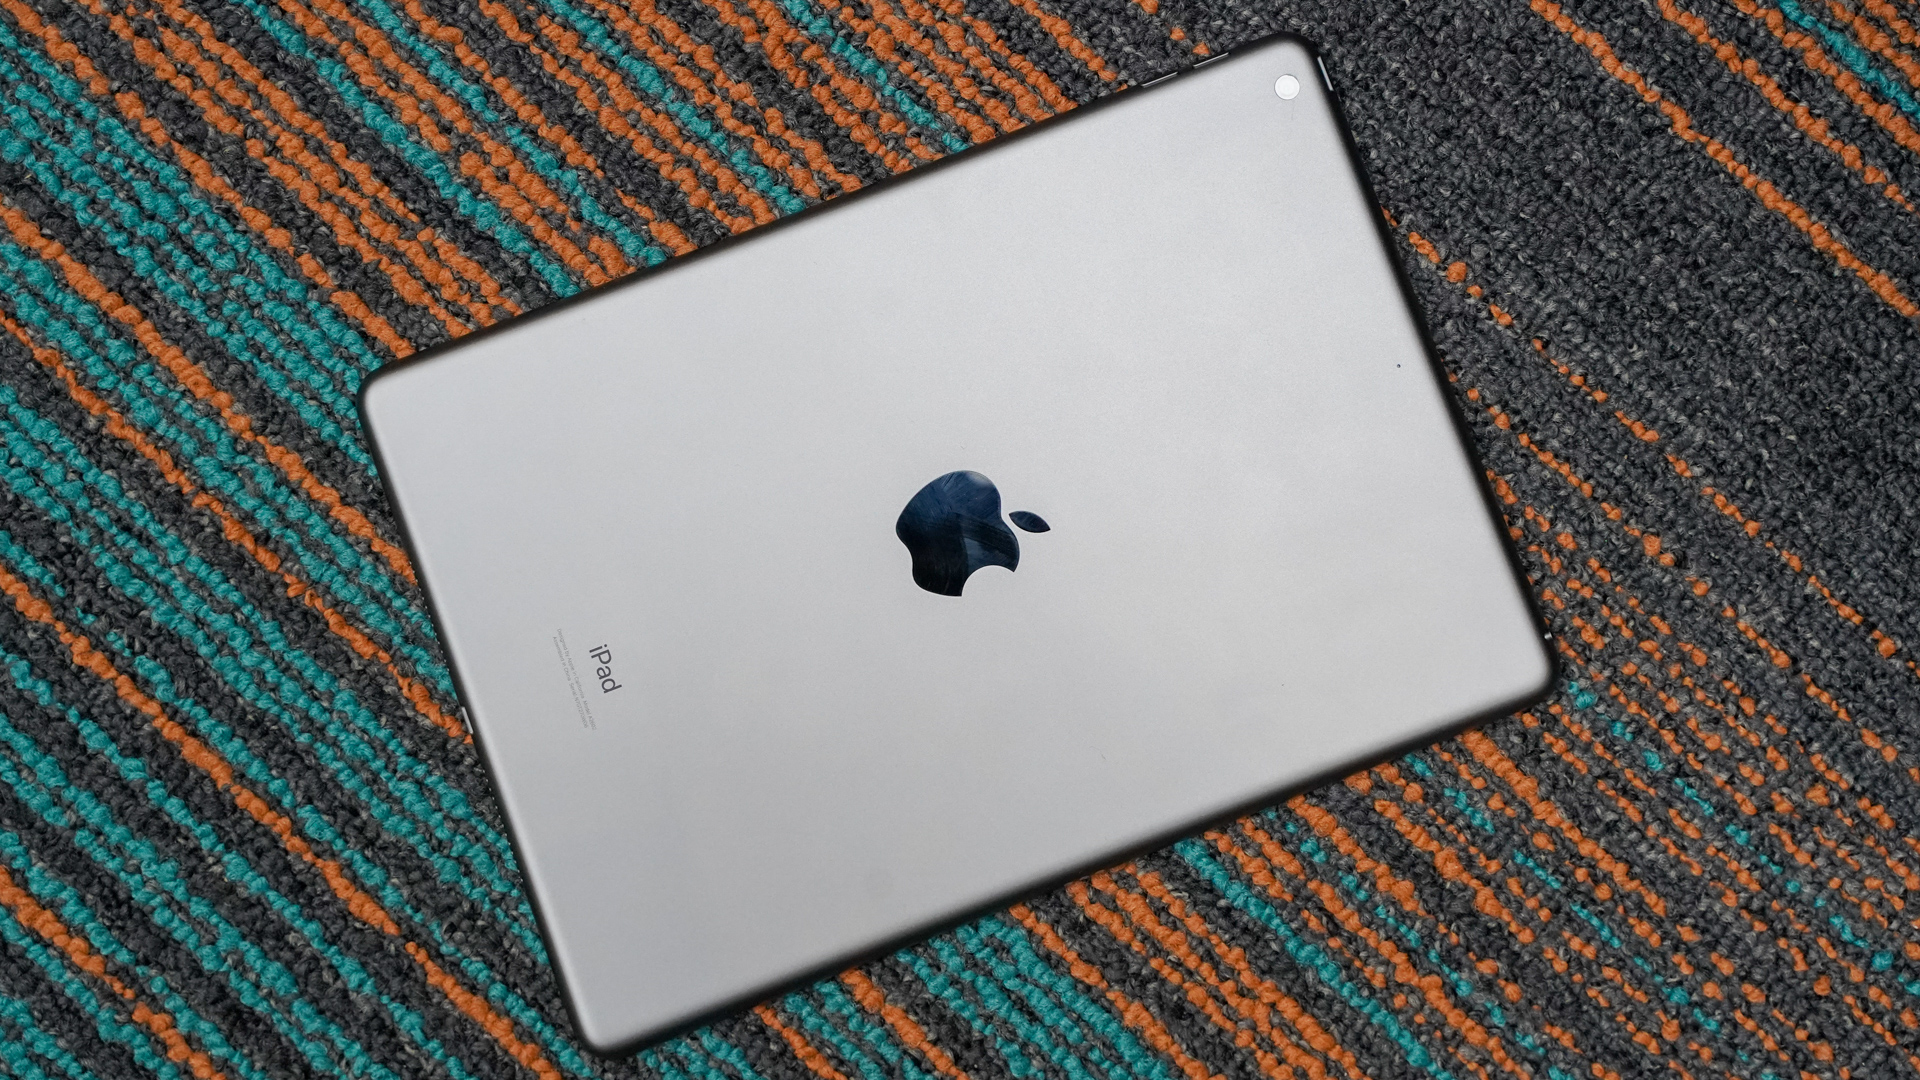 Apple iPad 2021 rear panel angled in carpet